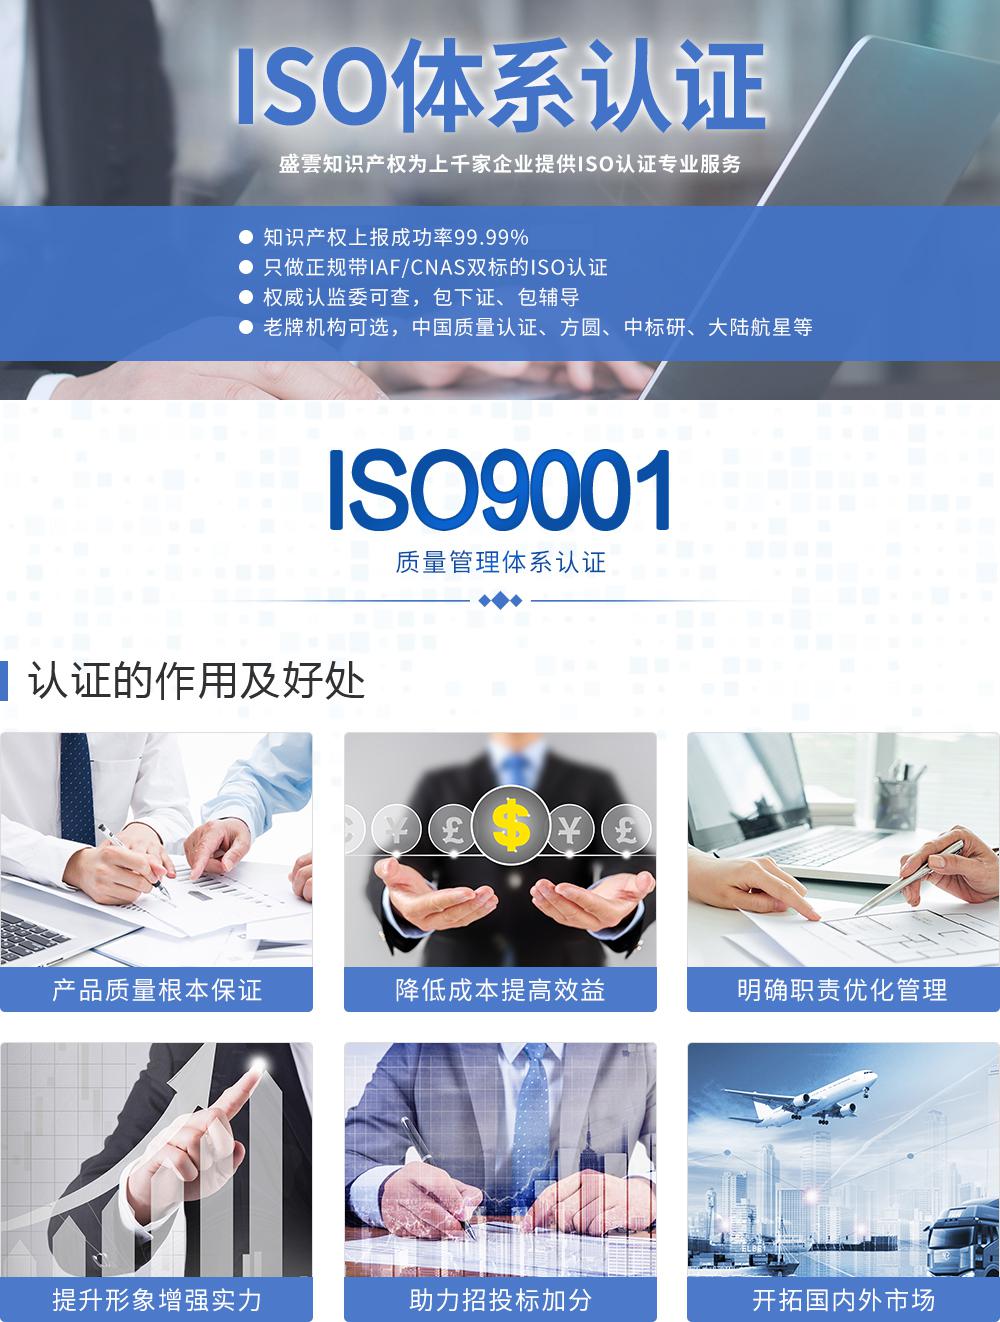 ISO9001質量管理體系認證保定盛雲知識產權代理有限公司